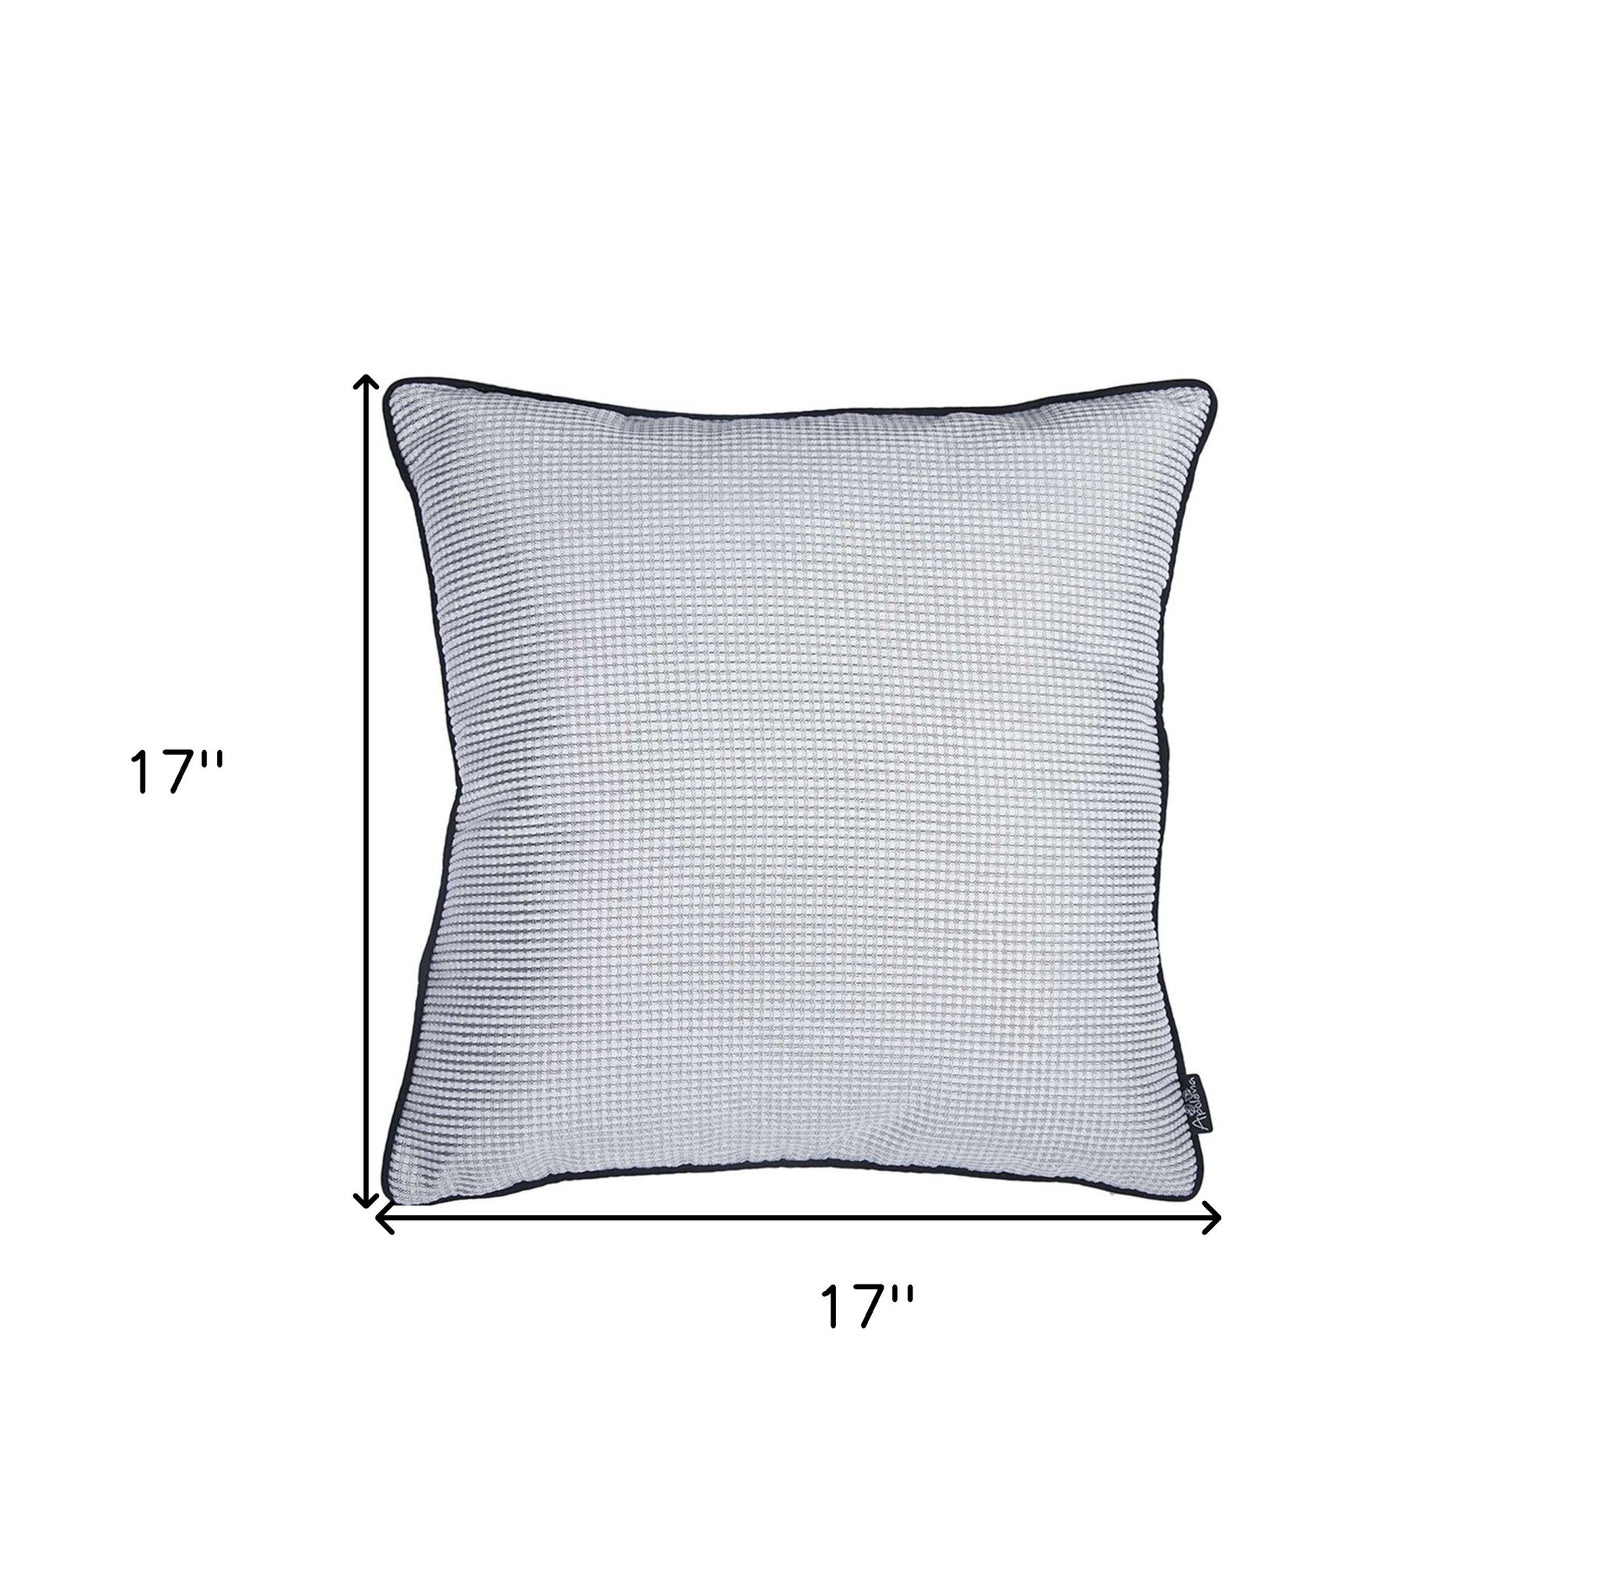 17"X 17" Jacquard Shadows Decorative Throw Pillow Cover